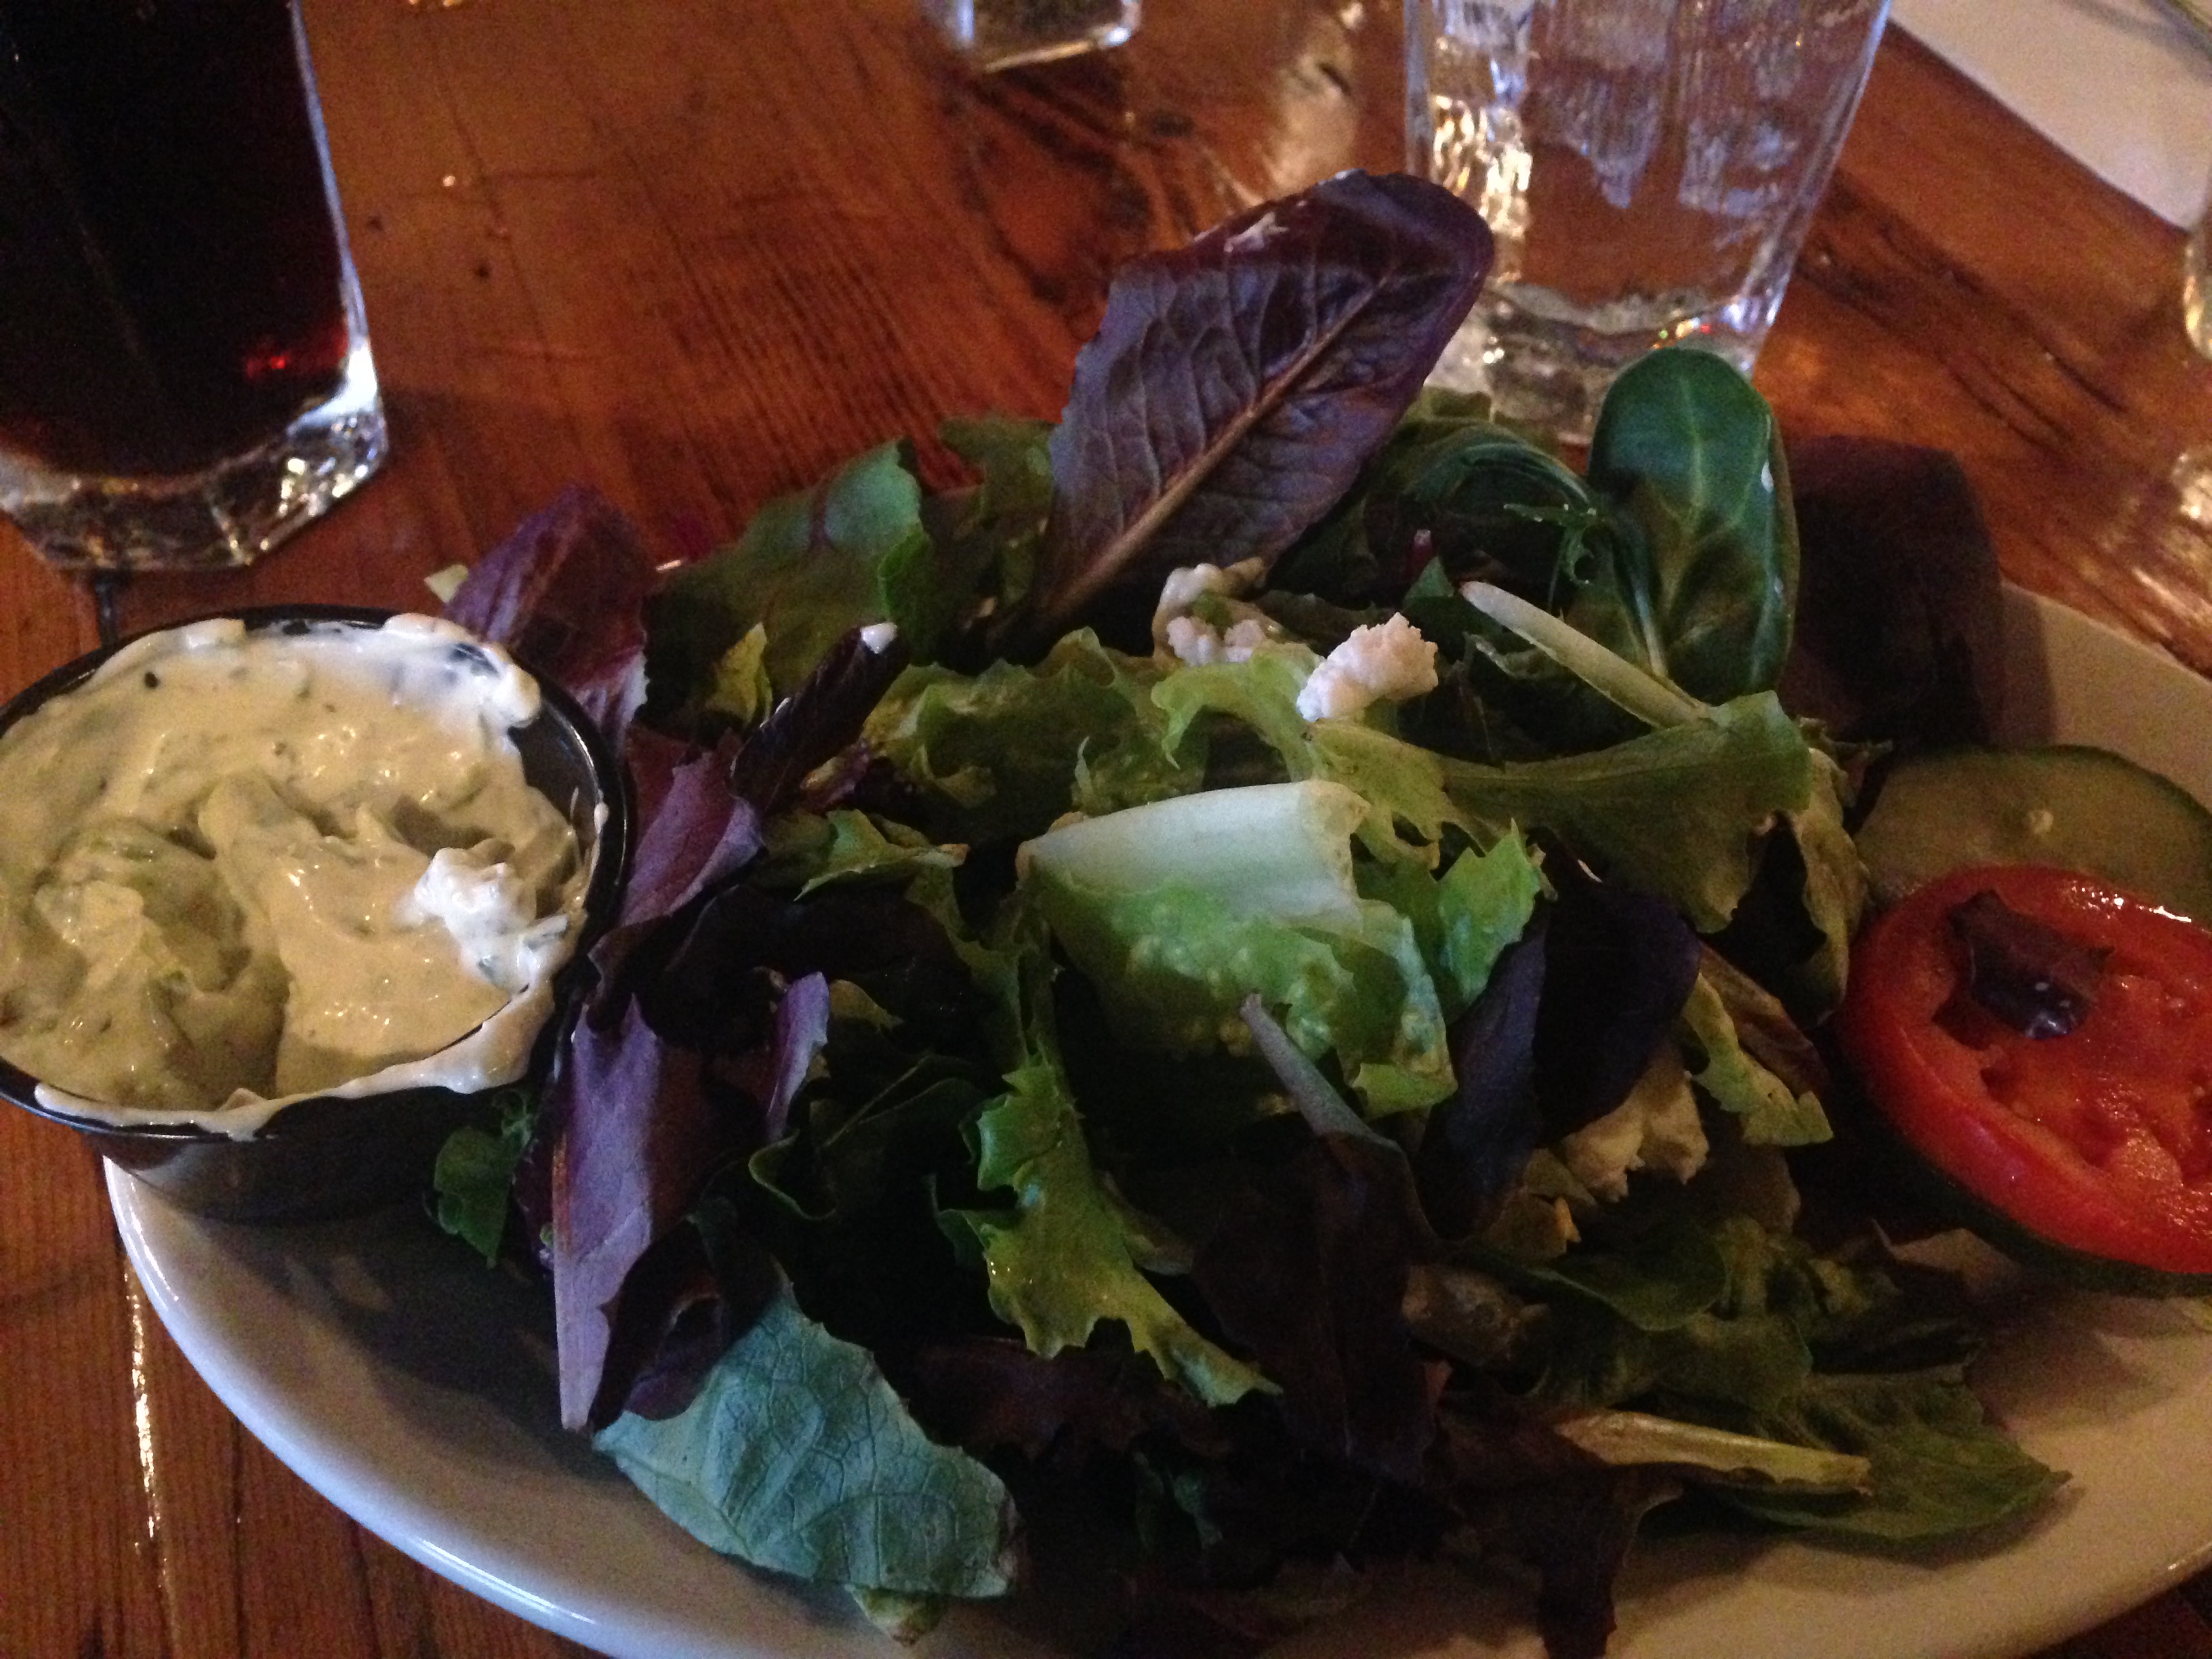 Miltons salad